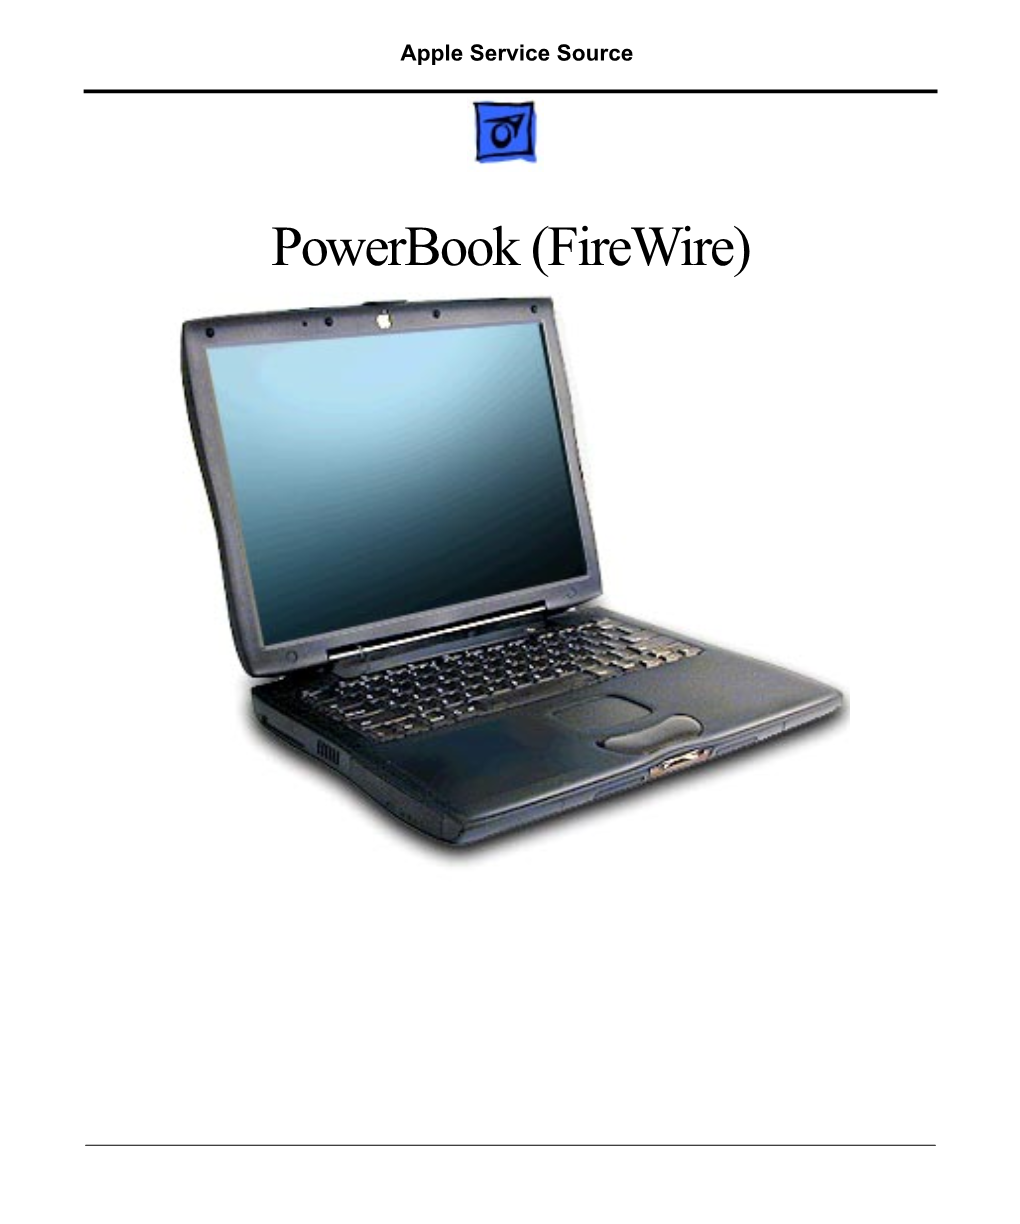 Powerbook (Firewire)